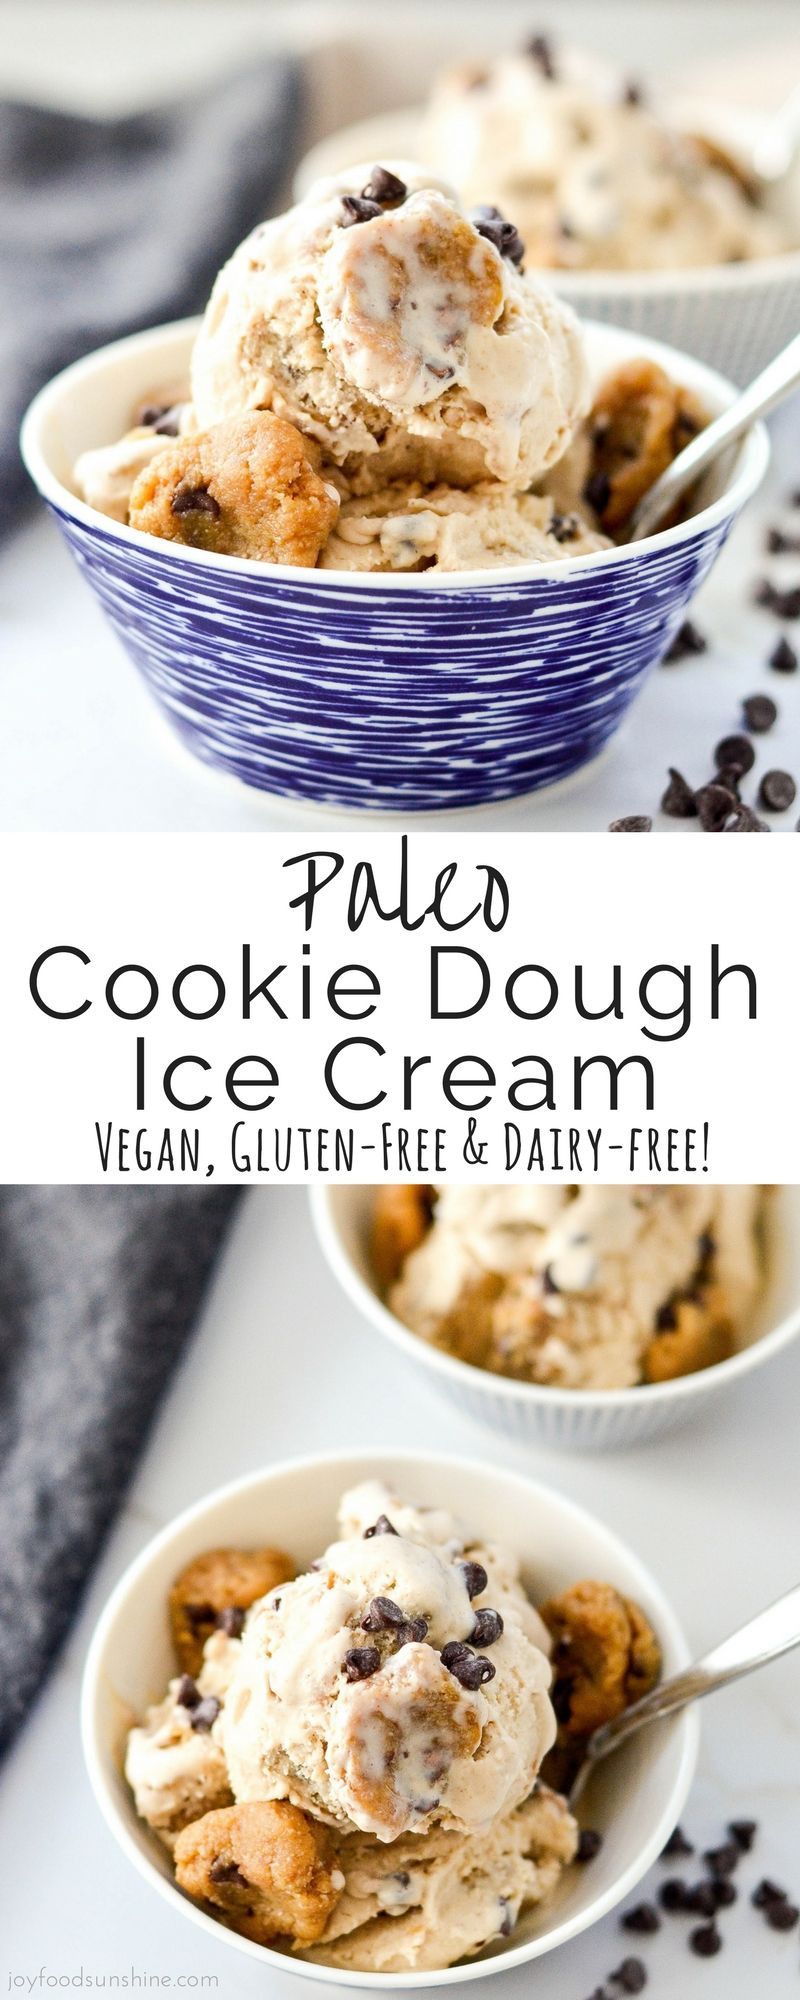 Healthy Paleo Desserts
 Vegan & Paleo Cookie Dough Ice Cream A healthy